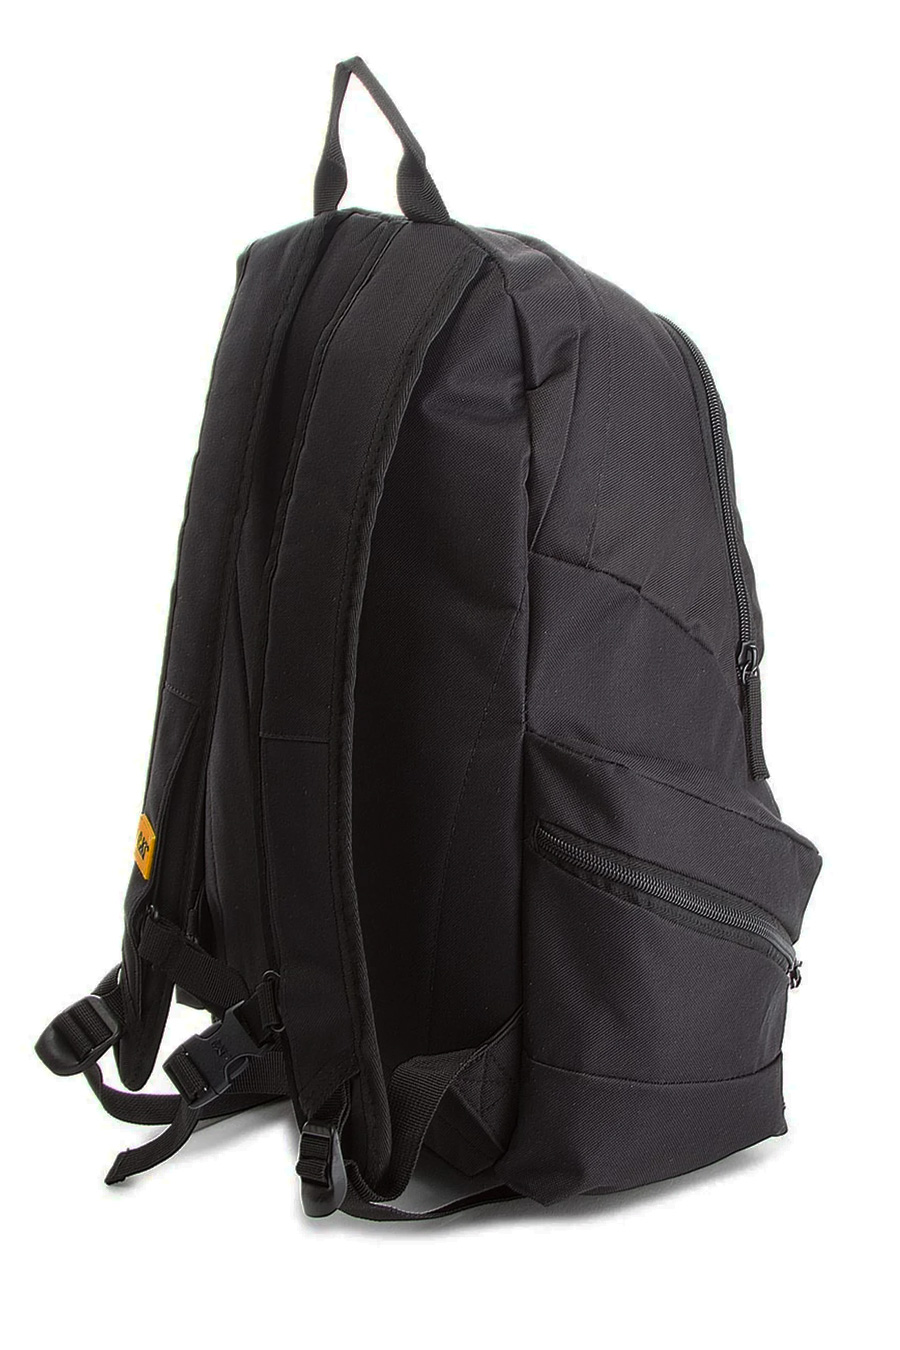 Backpack CAT 83541-01